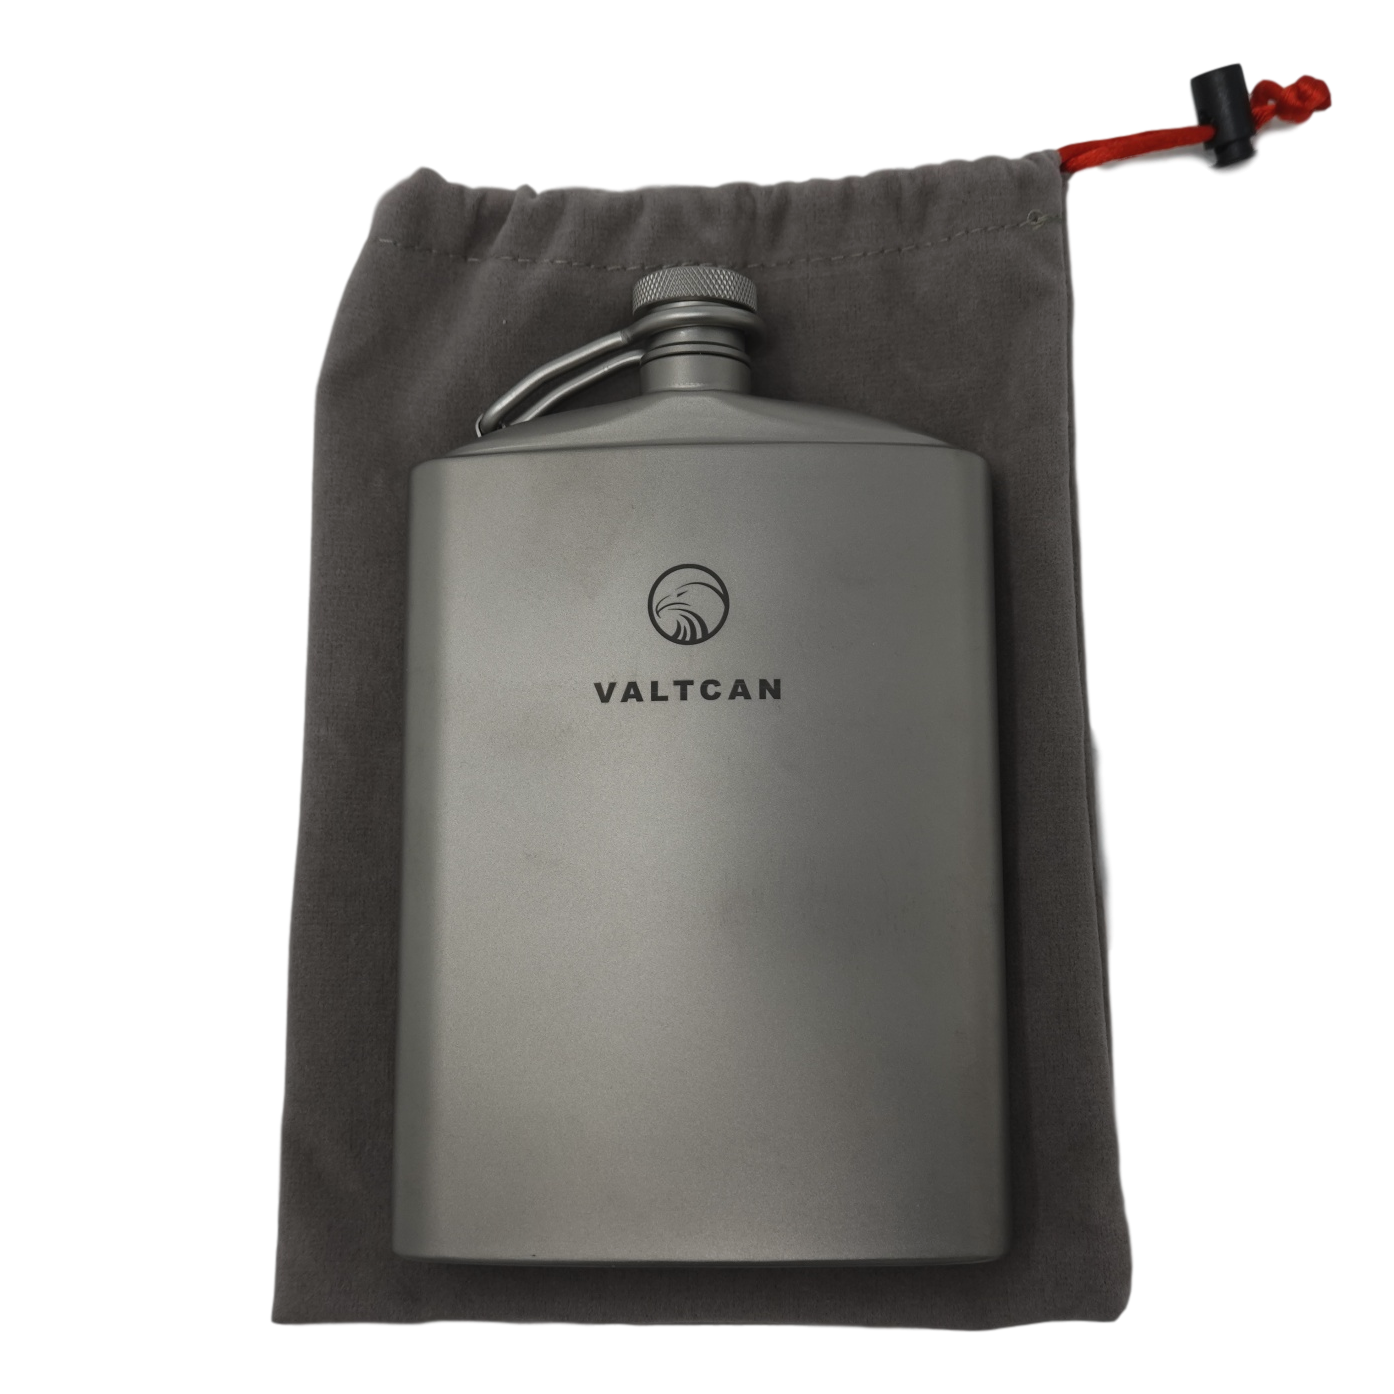 Valtcan Titanium Hip Flask Canteen 260ml 8.8 oz Capacity Ultralight 144g